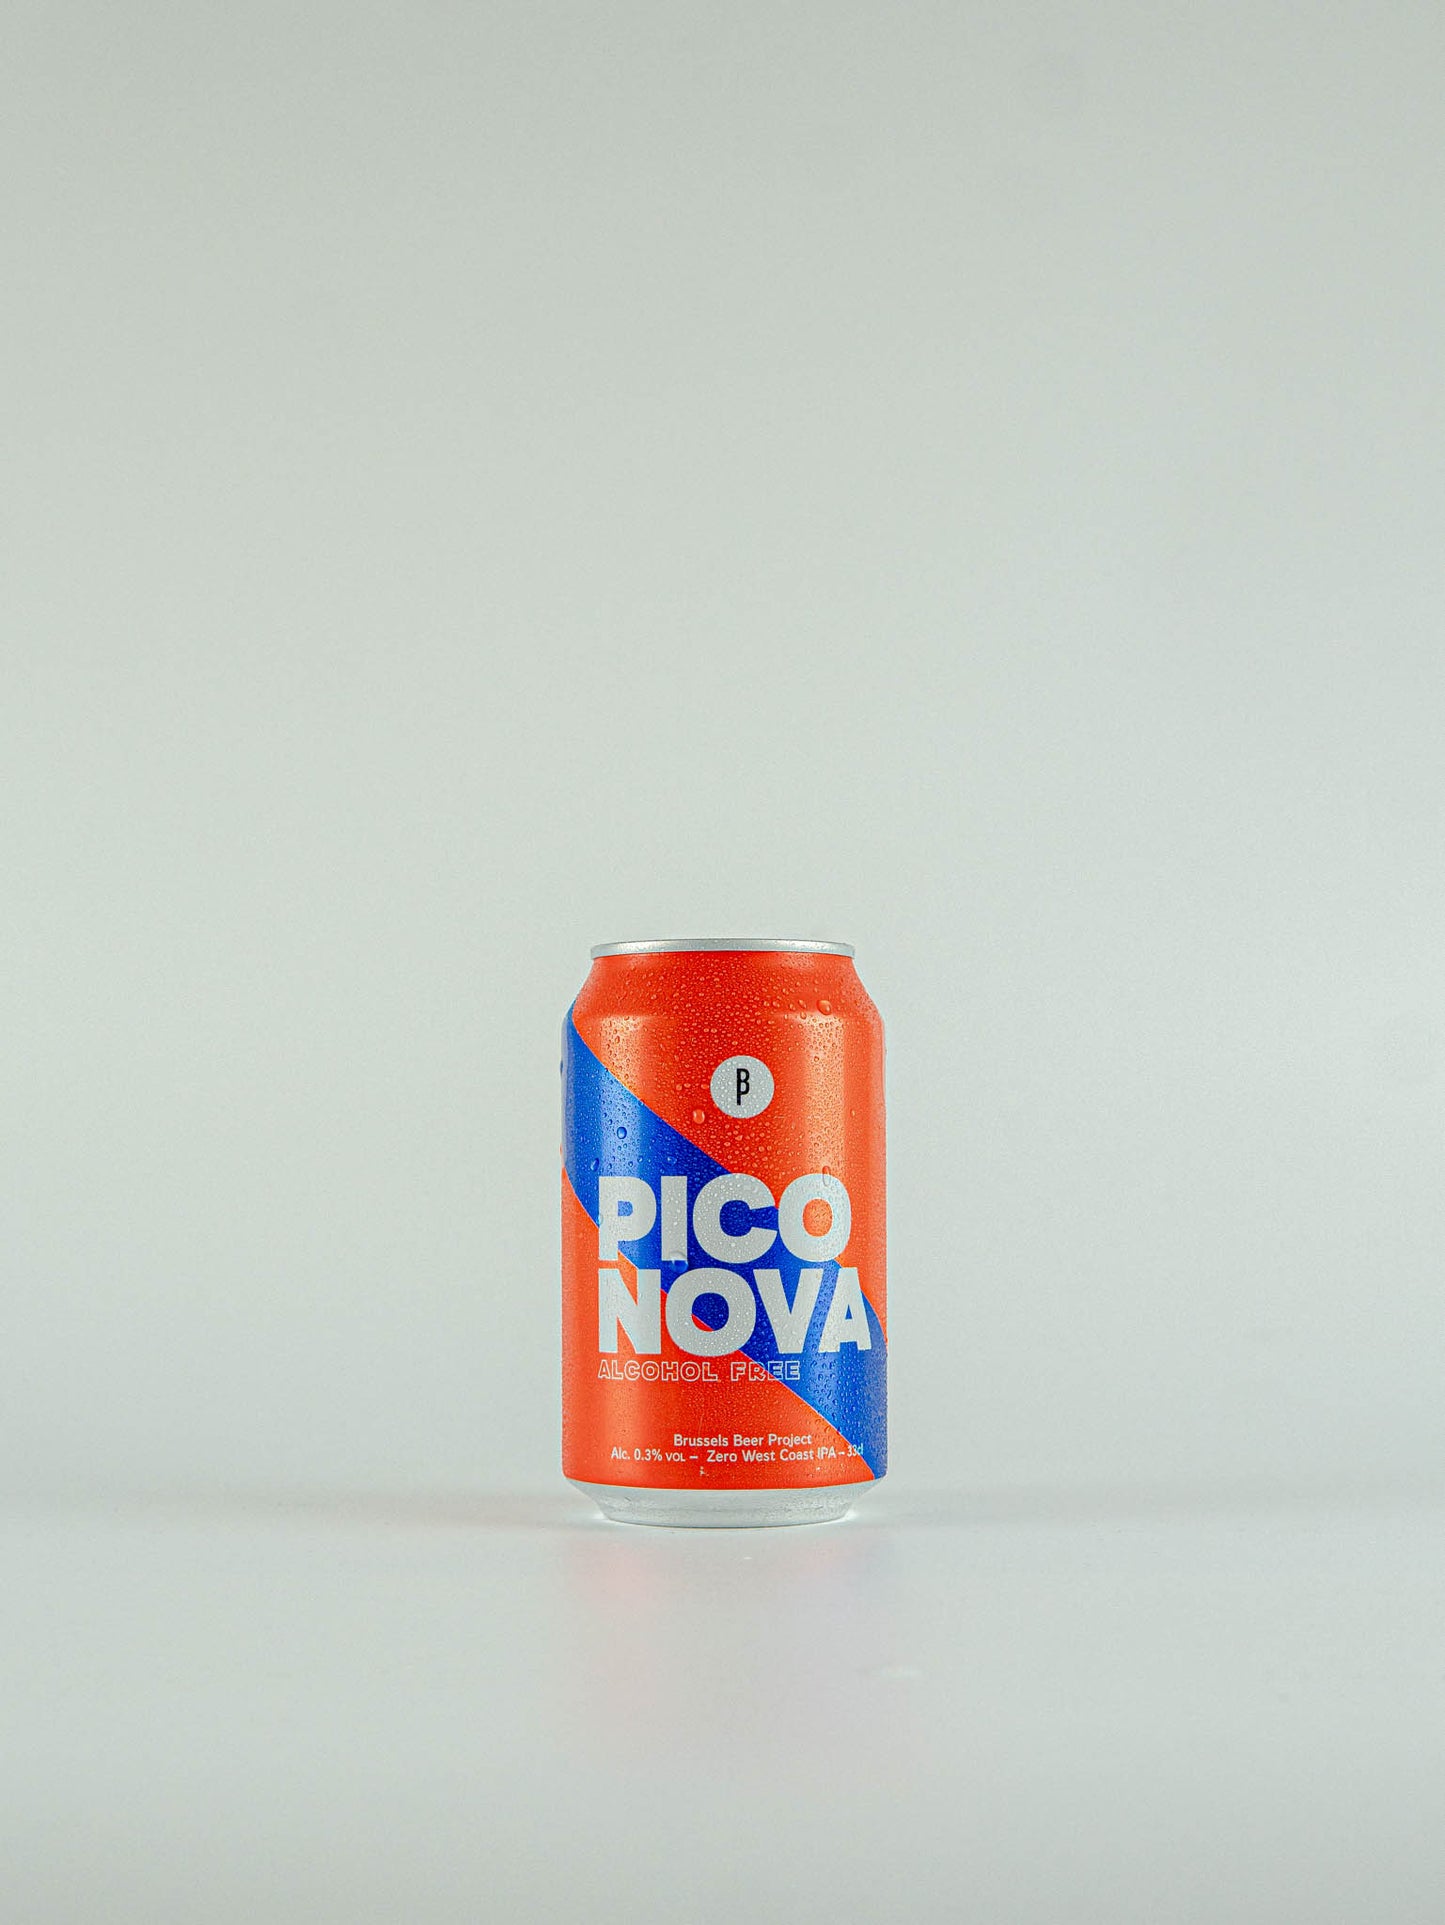 Brussels Beer Project Pico Nova West Coast IPA 0.3% - 330ml